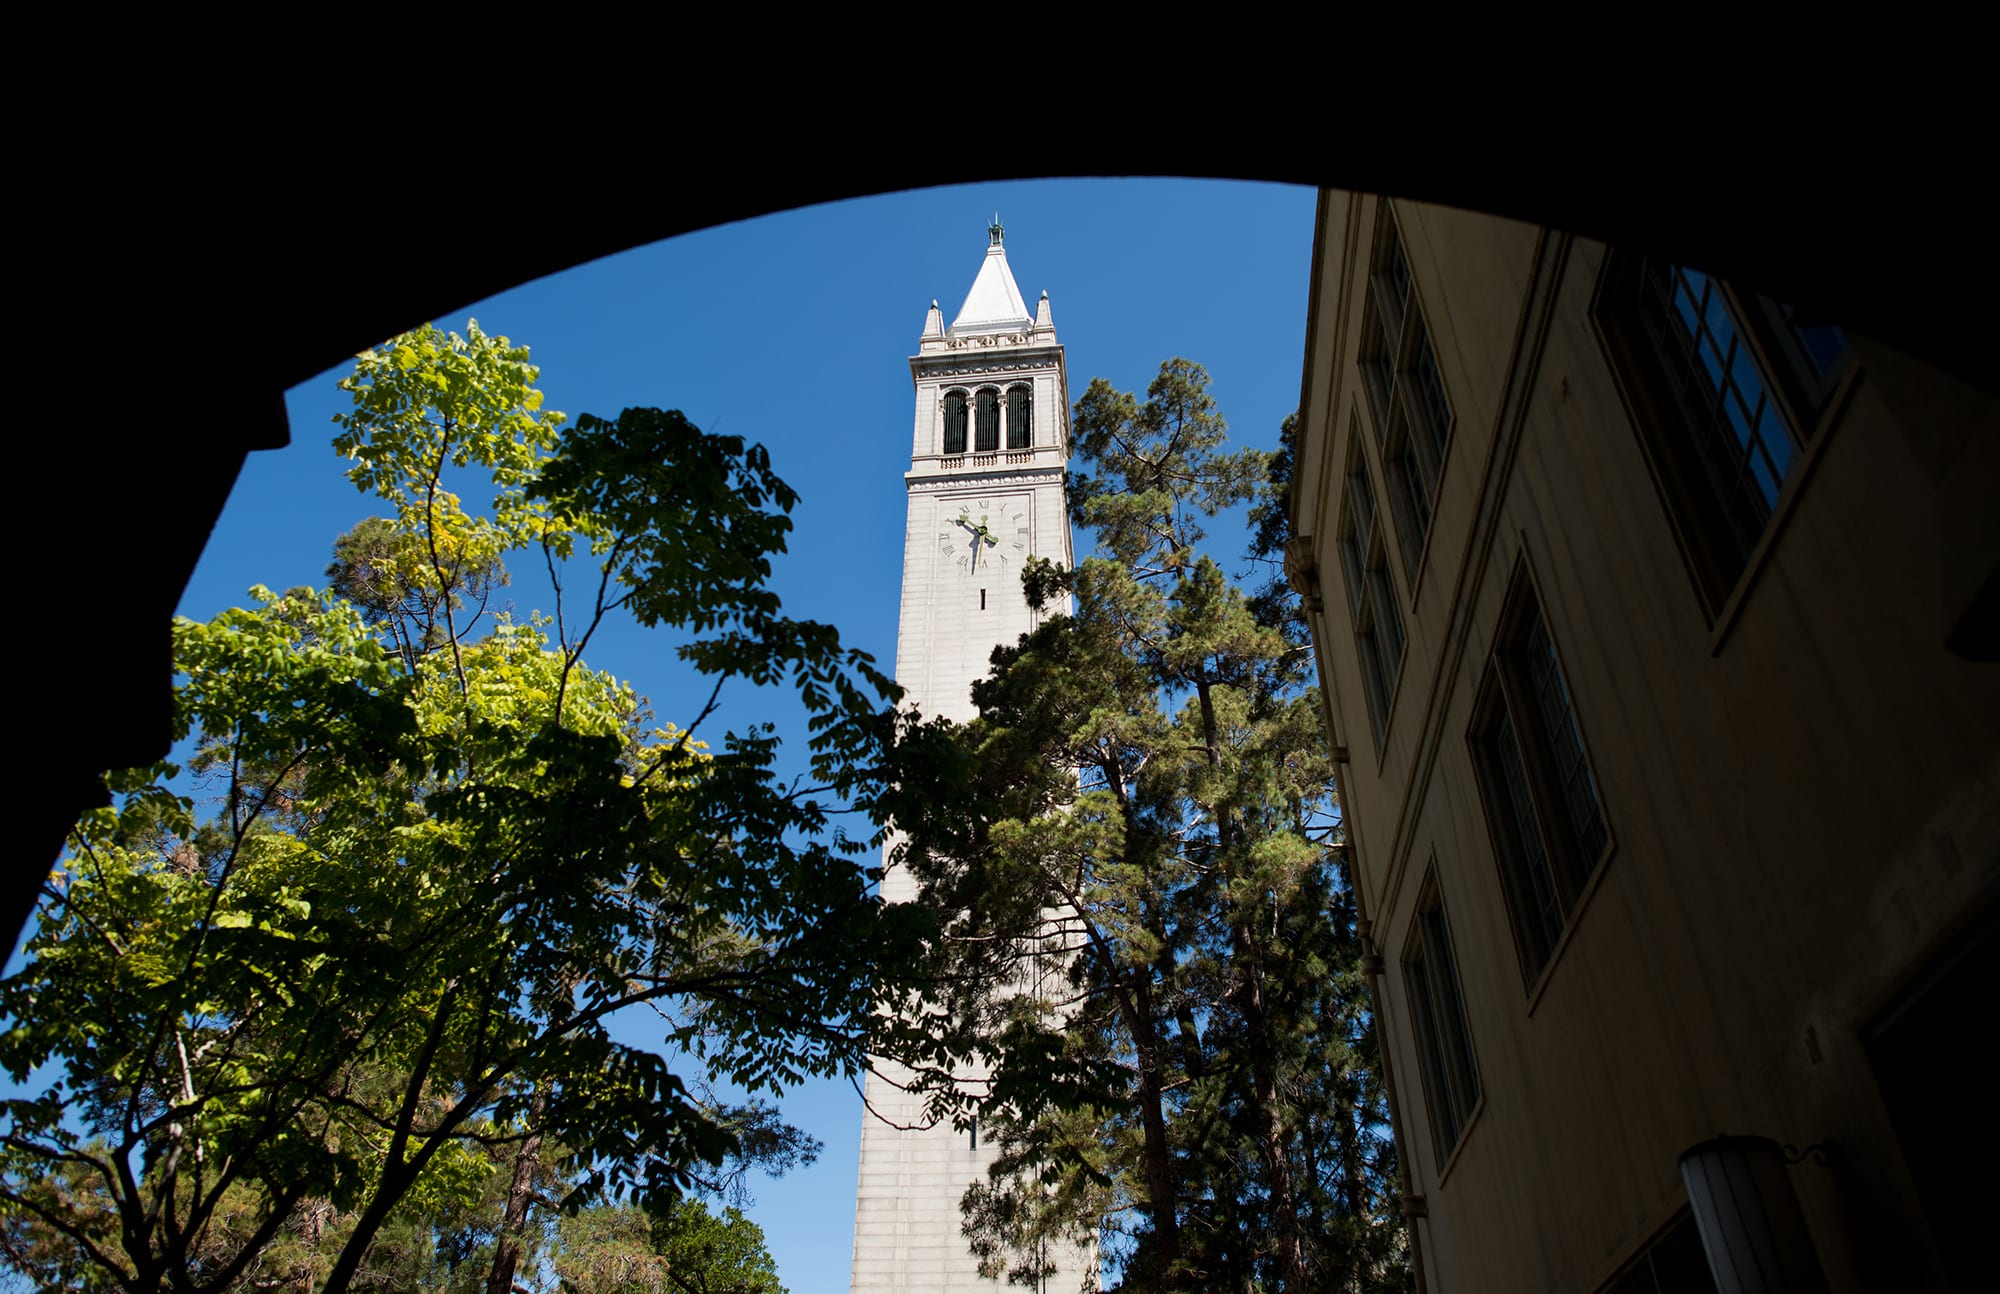 Berkeley campanile